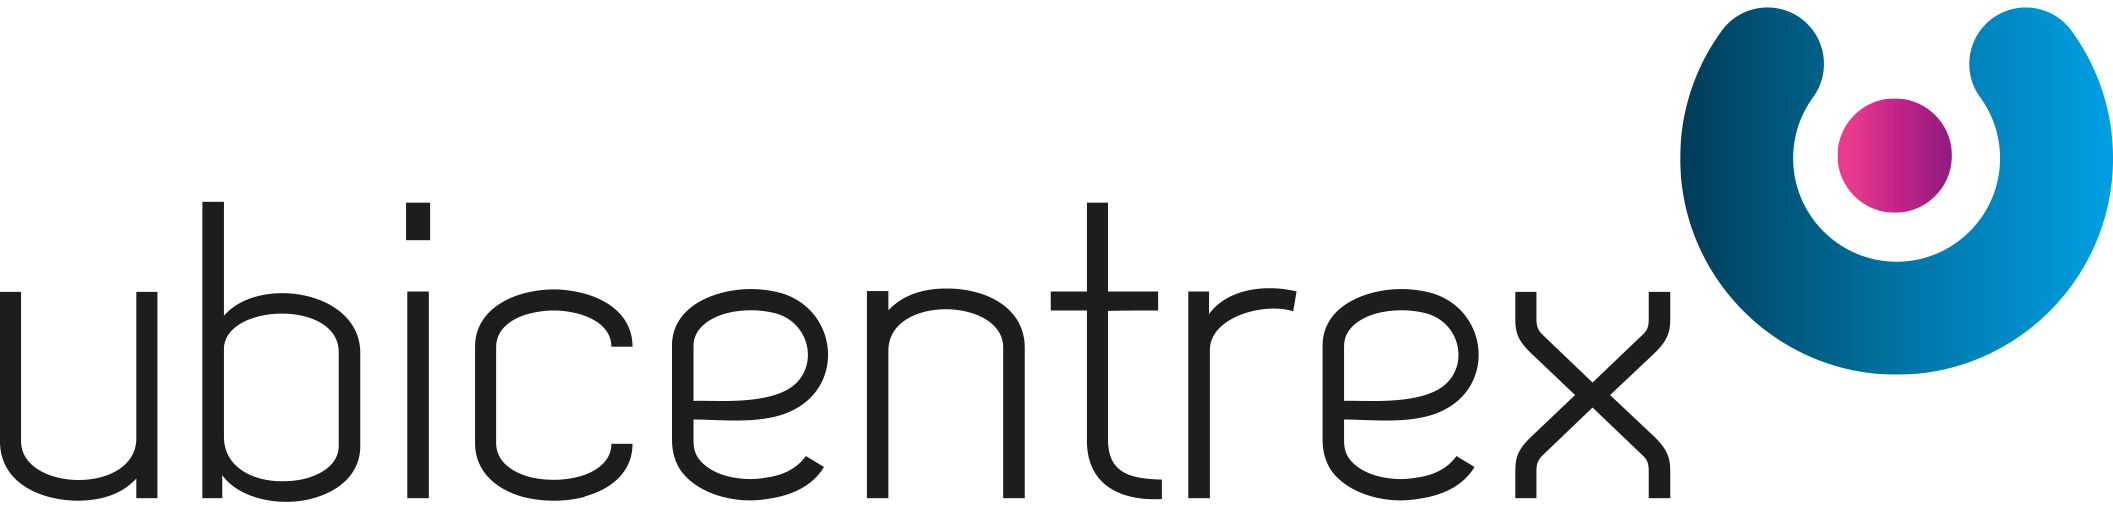 Logo Ubicentrex